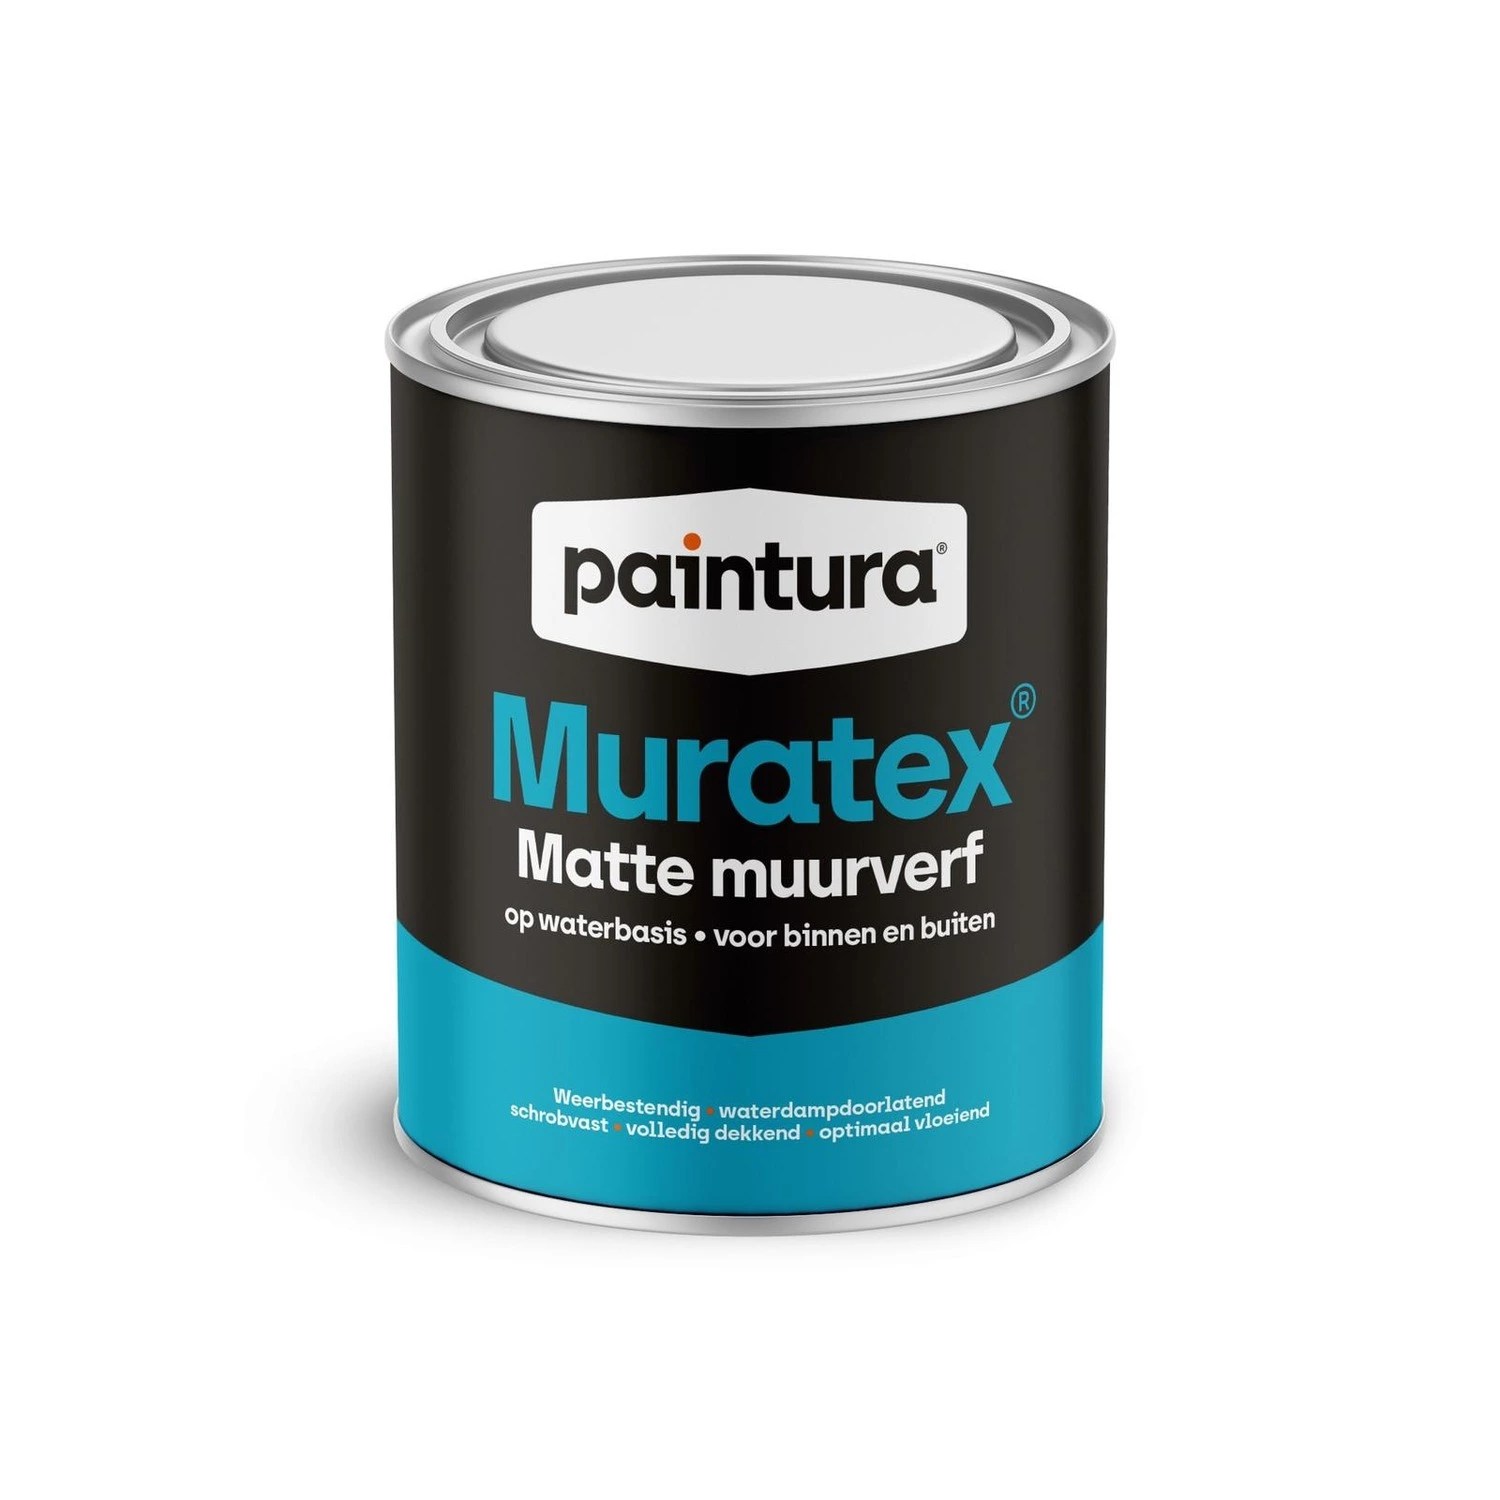 Paintura Muratex matte muurverf - op kleur gemengd - 1L